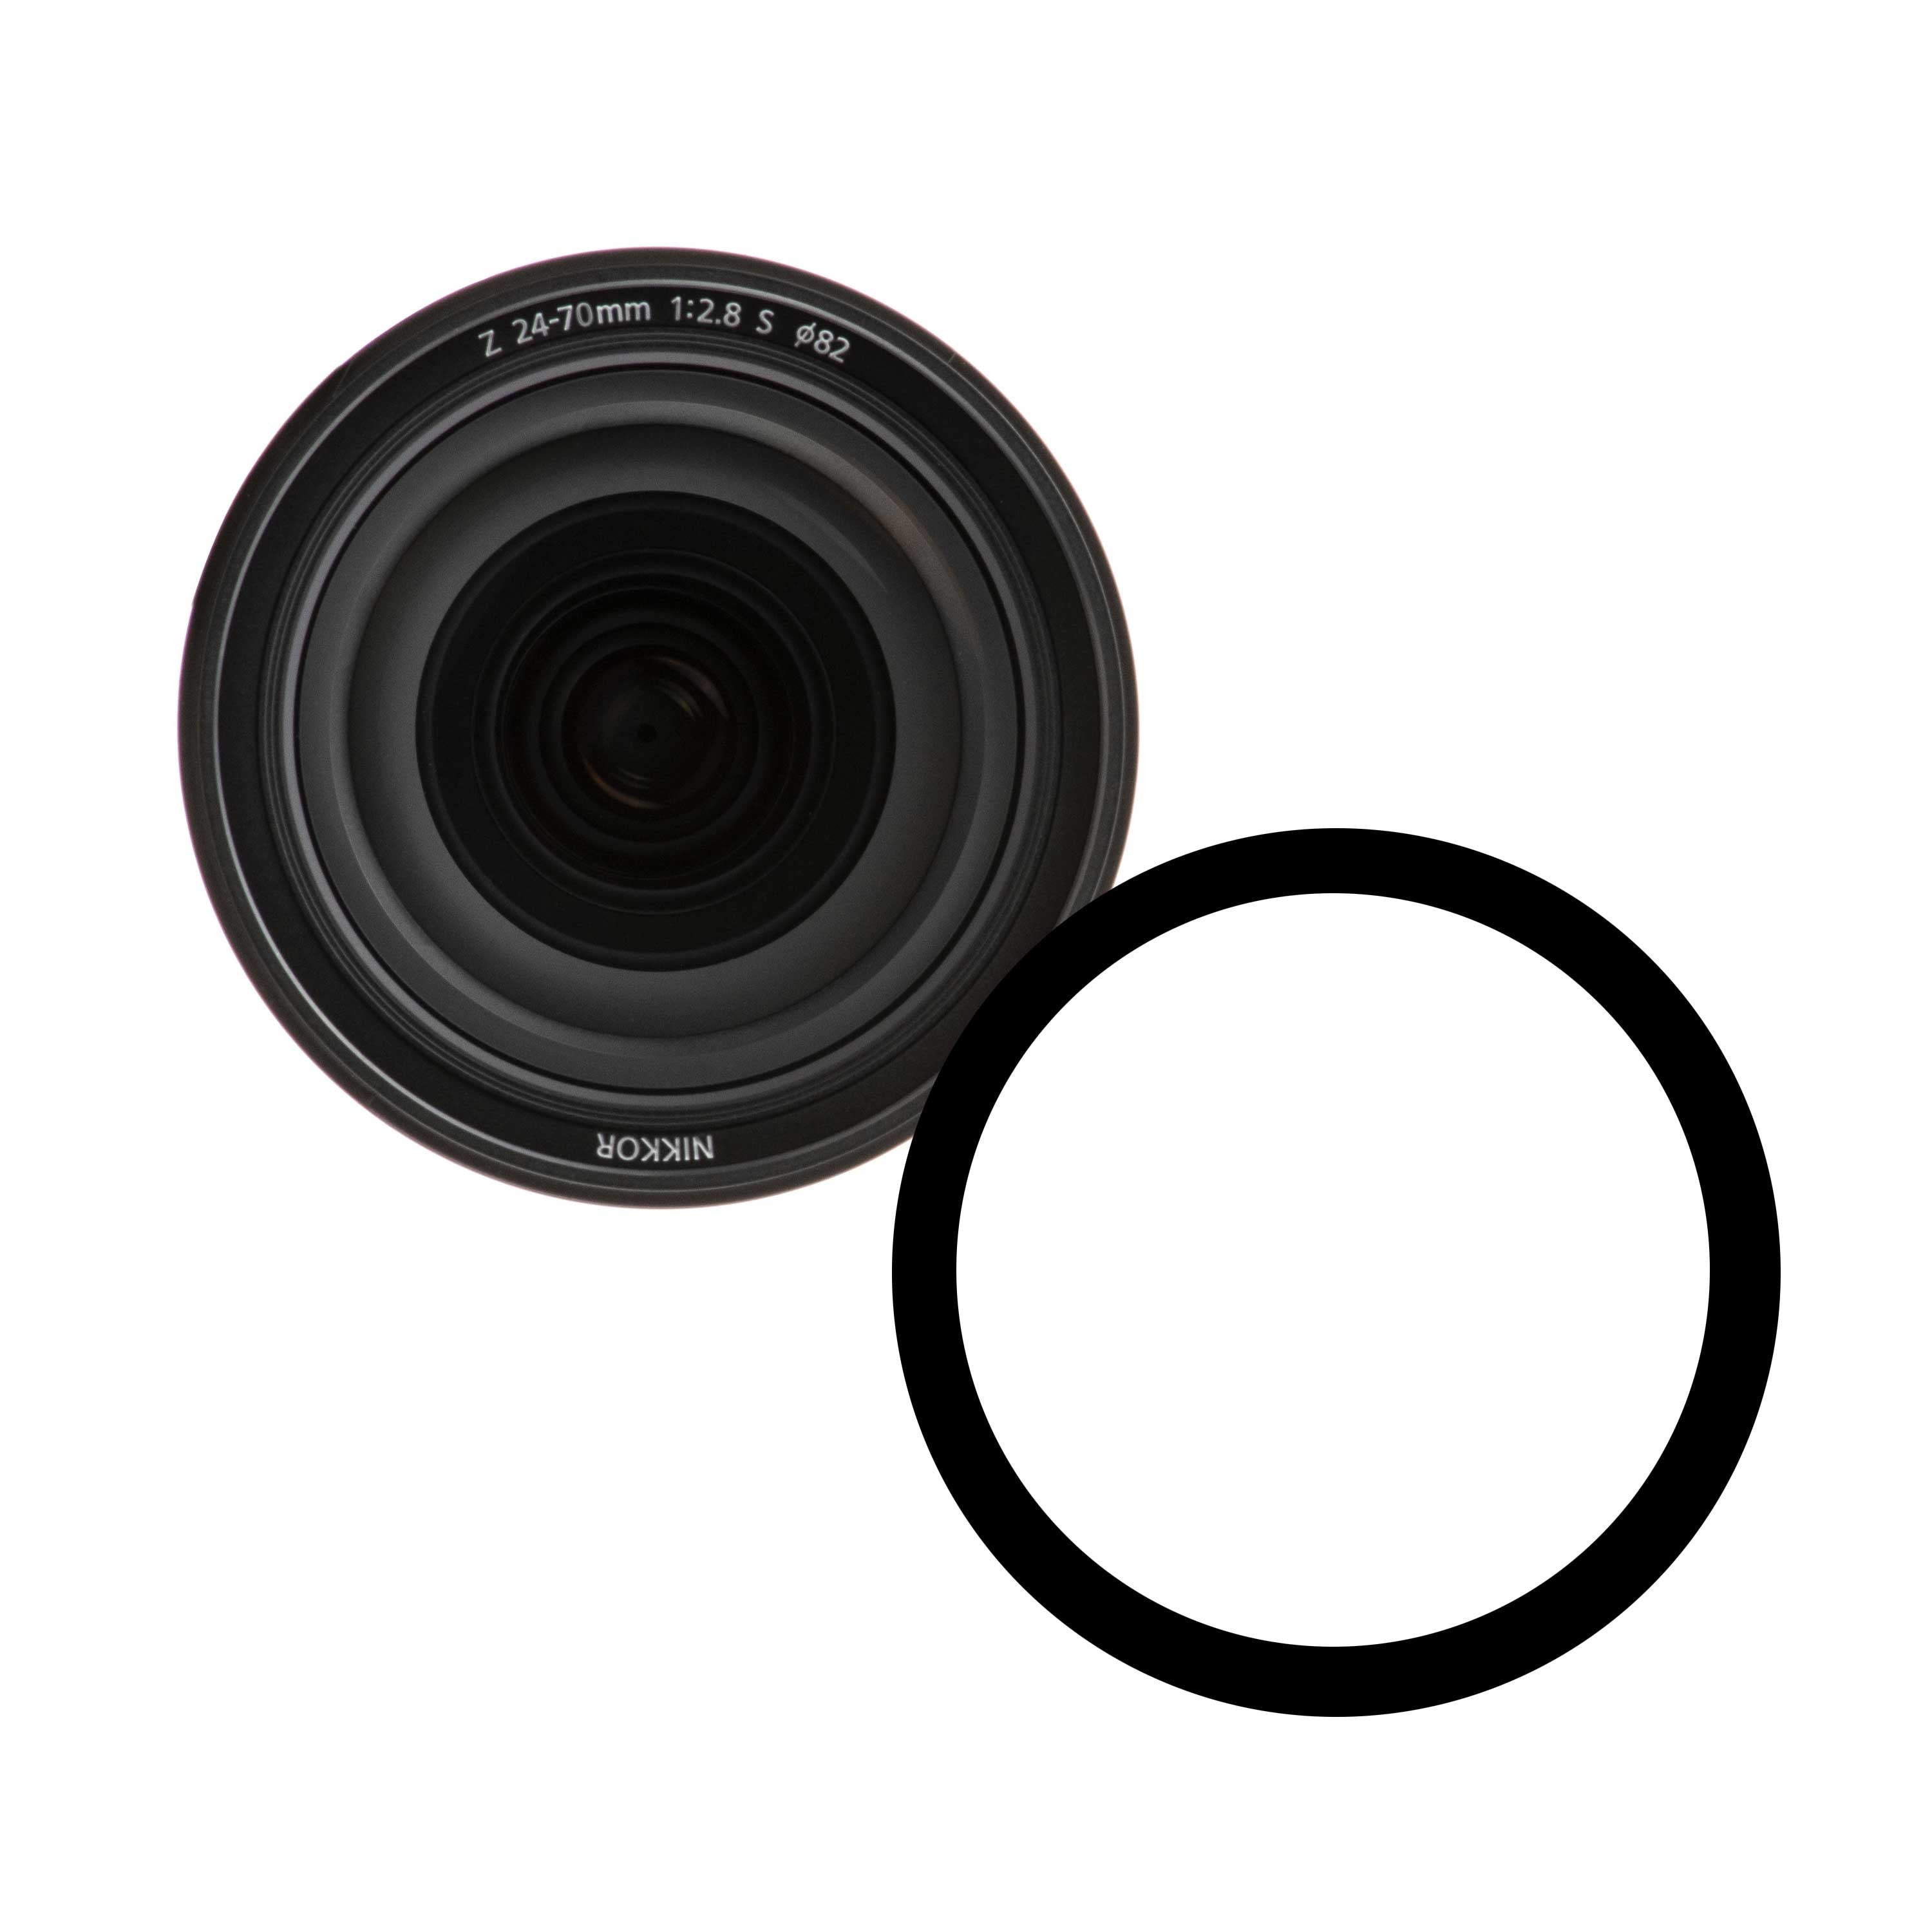 Anti-Reflection Ring for Nikon NIKKOR Z 24-70mm f/2.8 S Lens